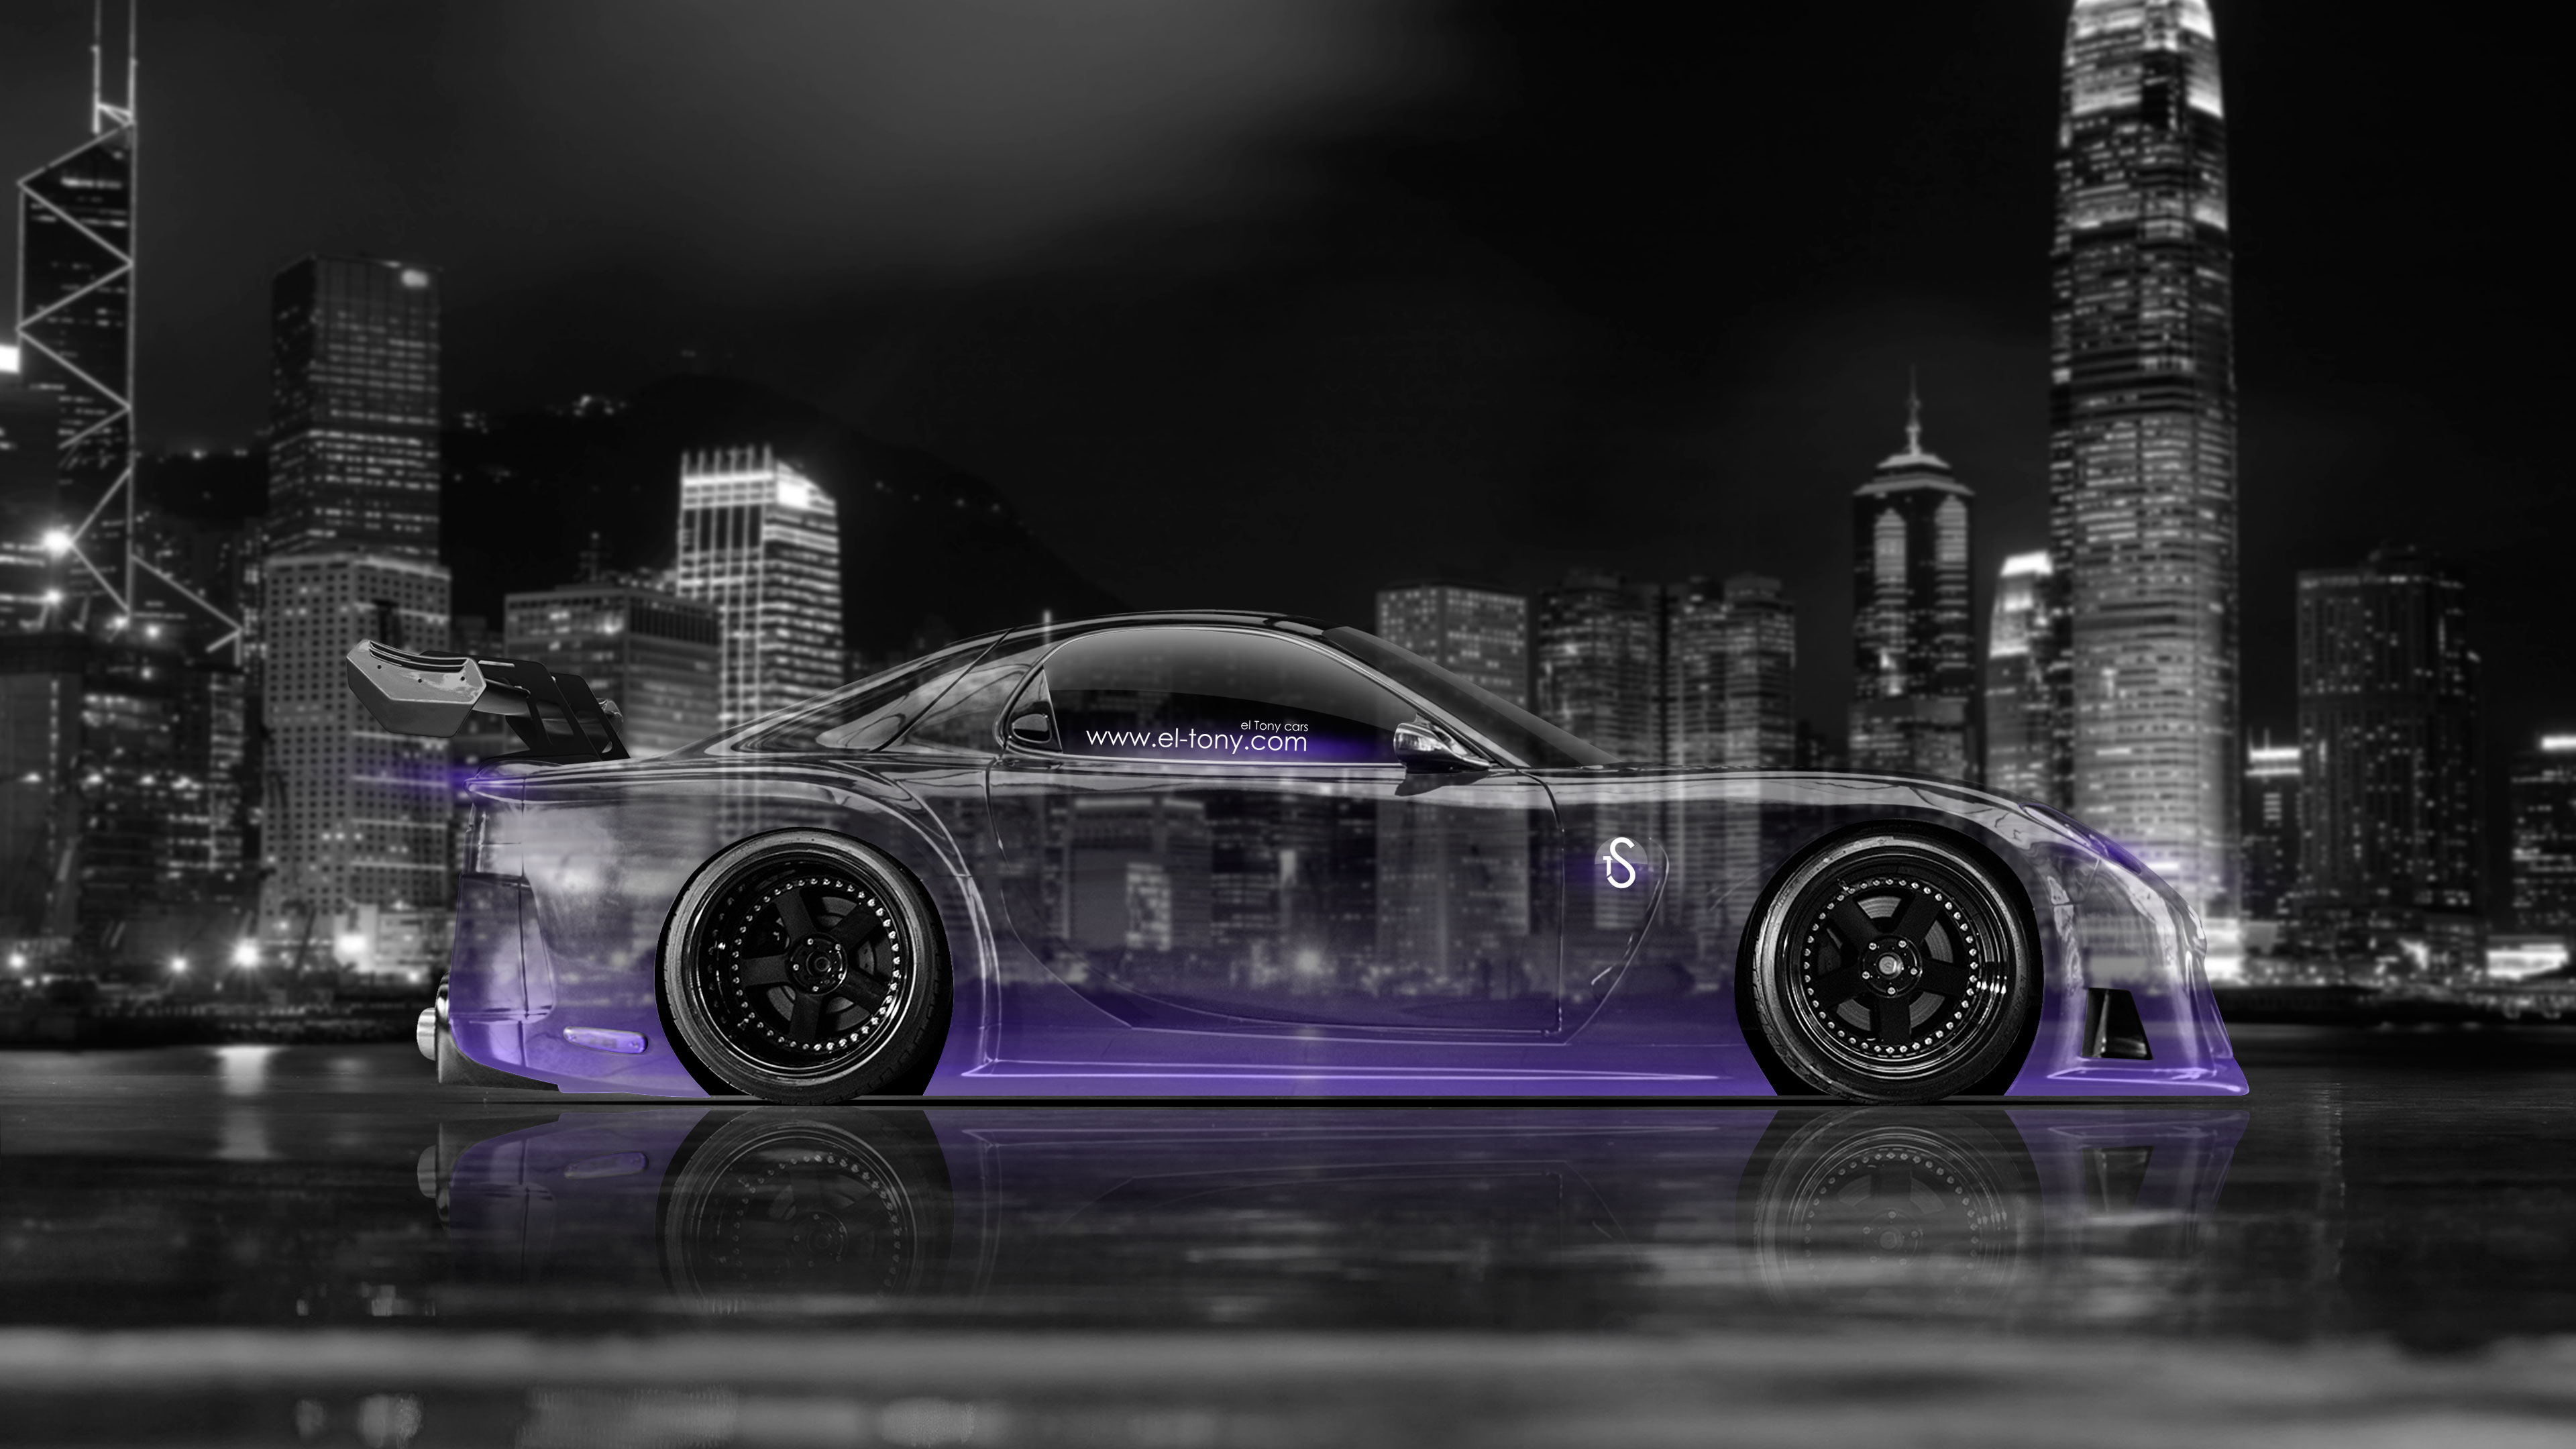 Veilside Jdm Side Crystal City Car Art Violet Neon 4k Wallpaper